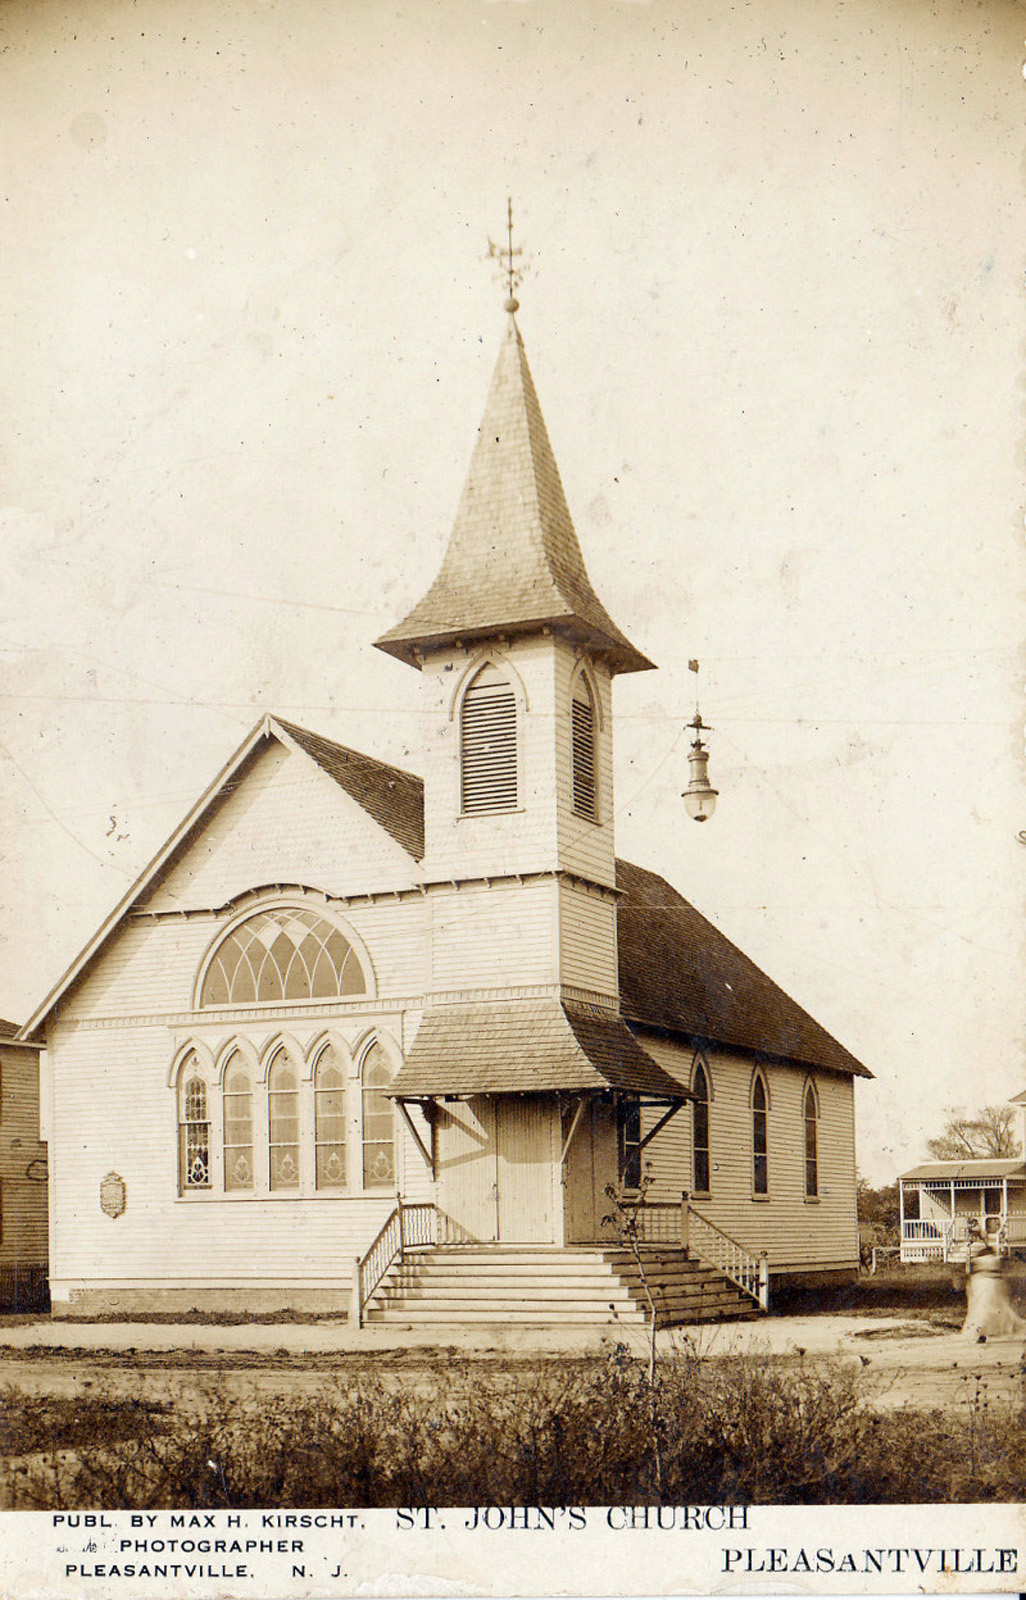 Pleasantville - Saint Johns Church - Max Kirscht - c 1910